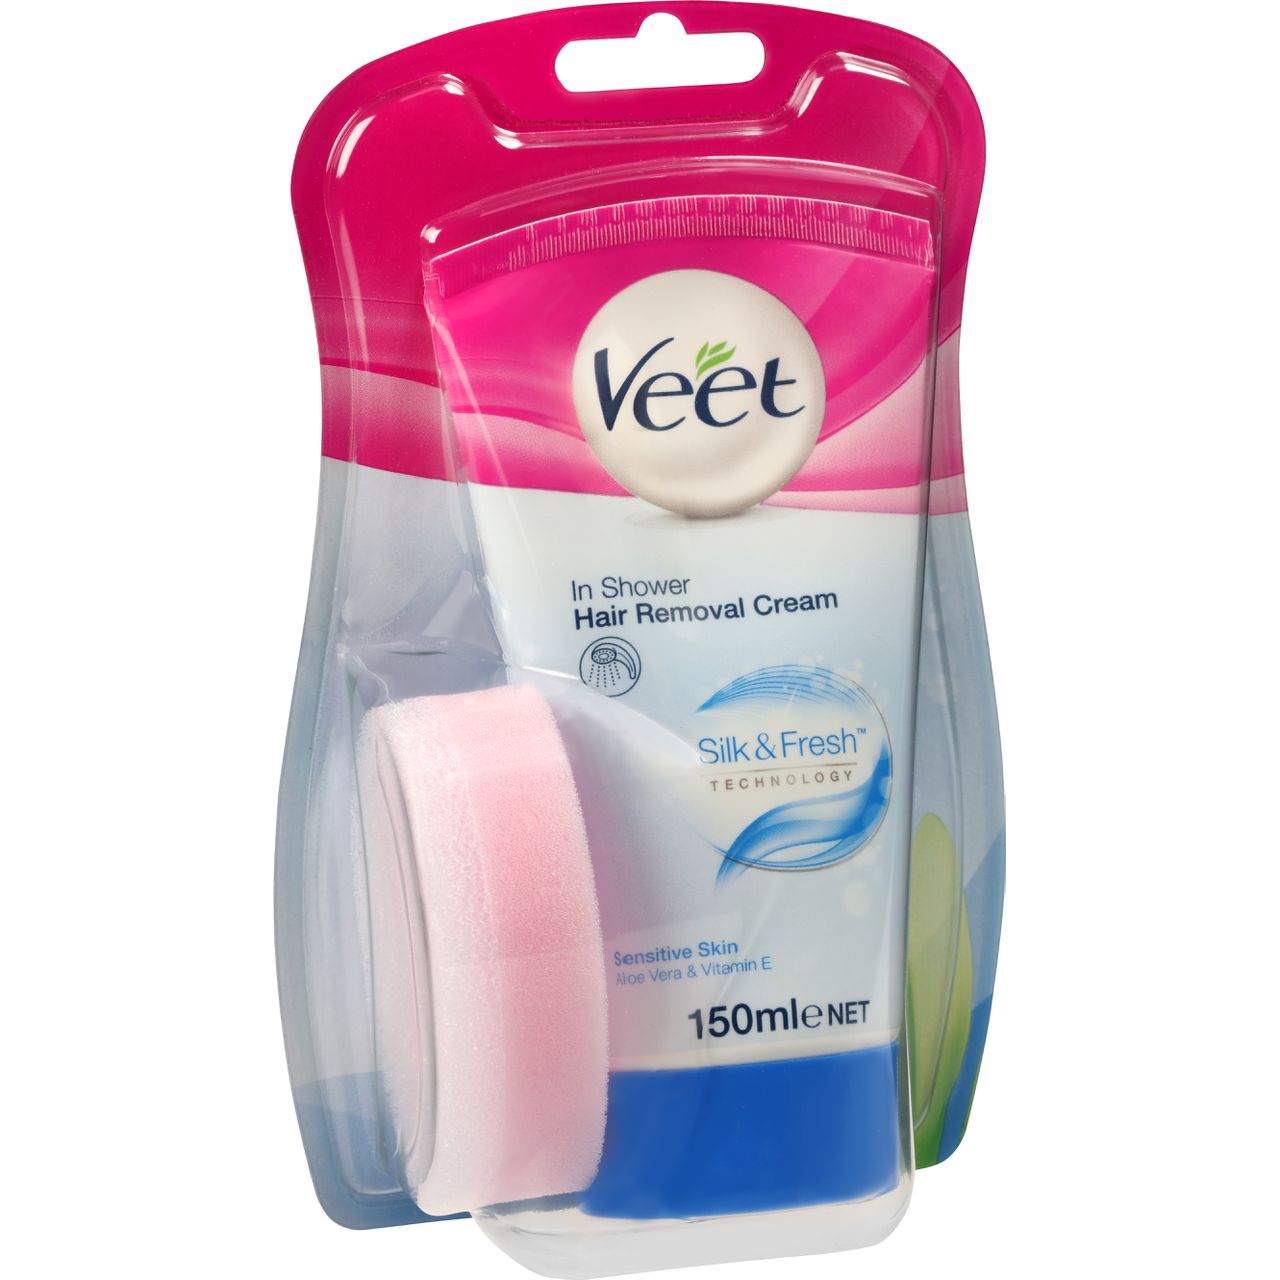 Veet ® In Shower Hair Removal Cream Sensitive Veet ® New Zealand.